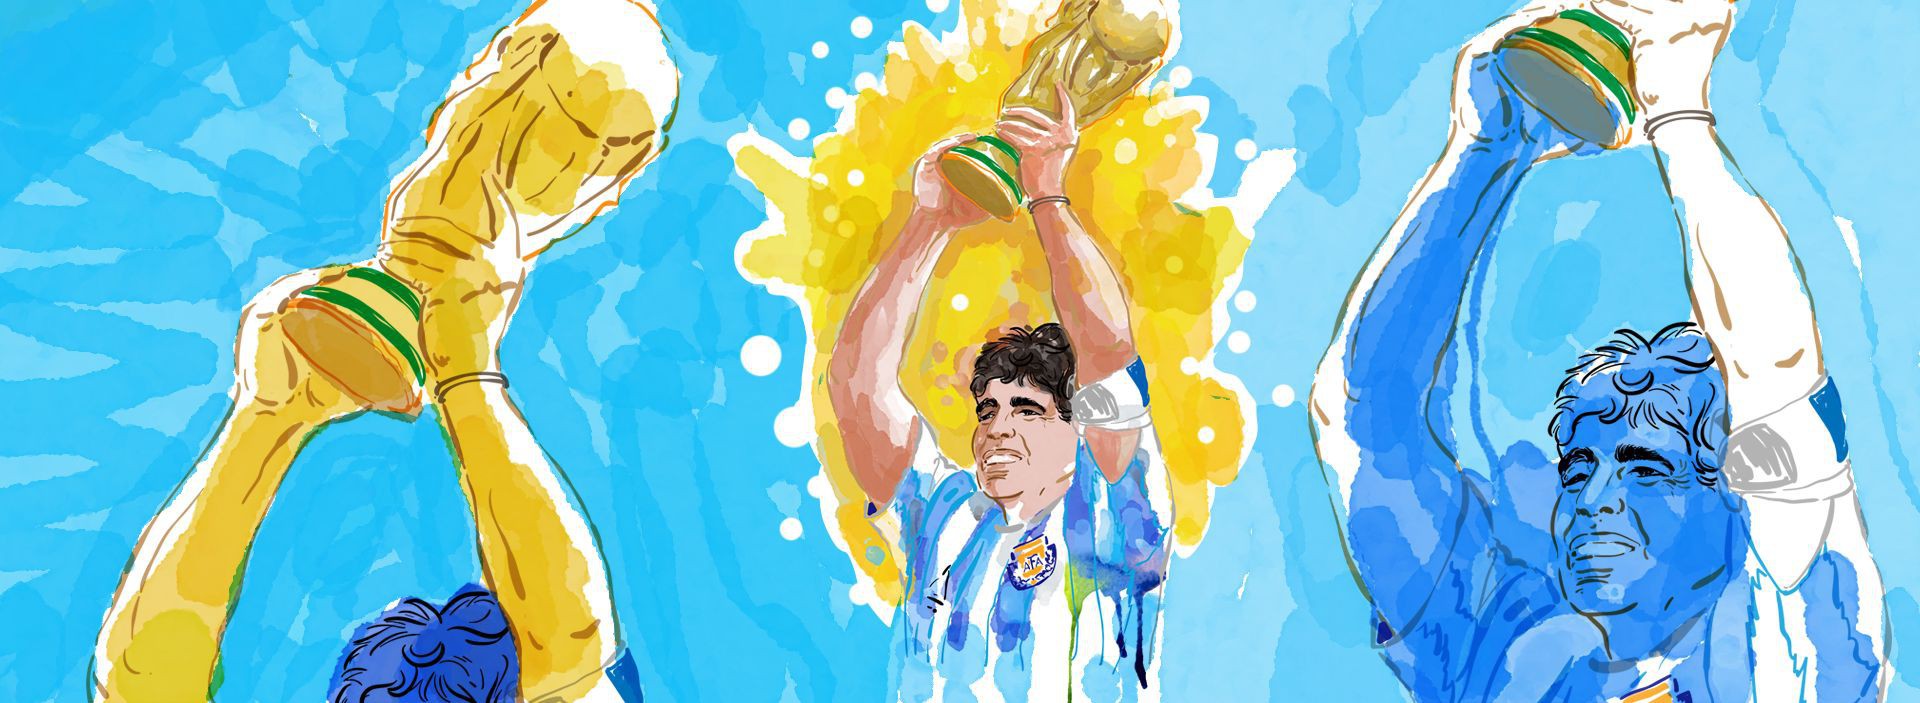 Capa - Diego Maradona (Foto: Carlus Campus)